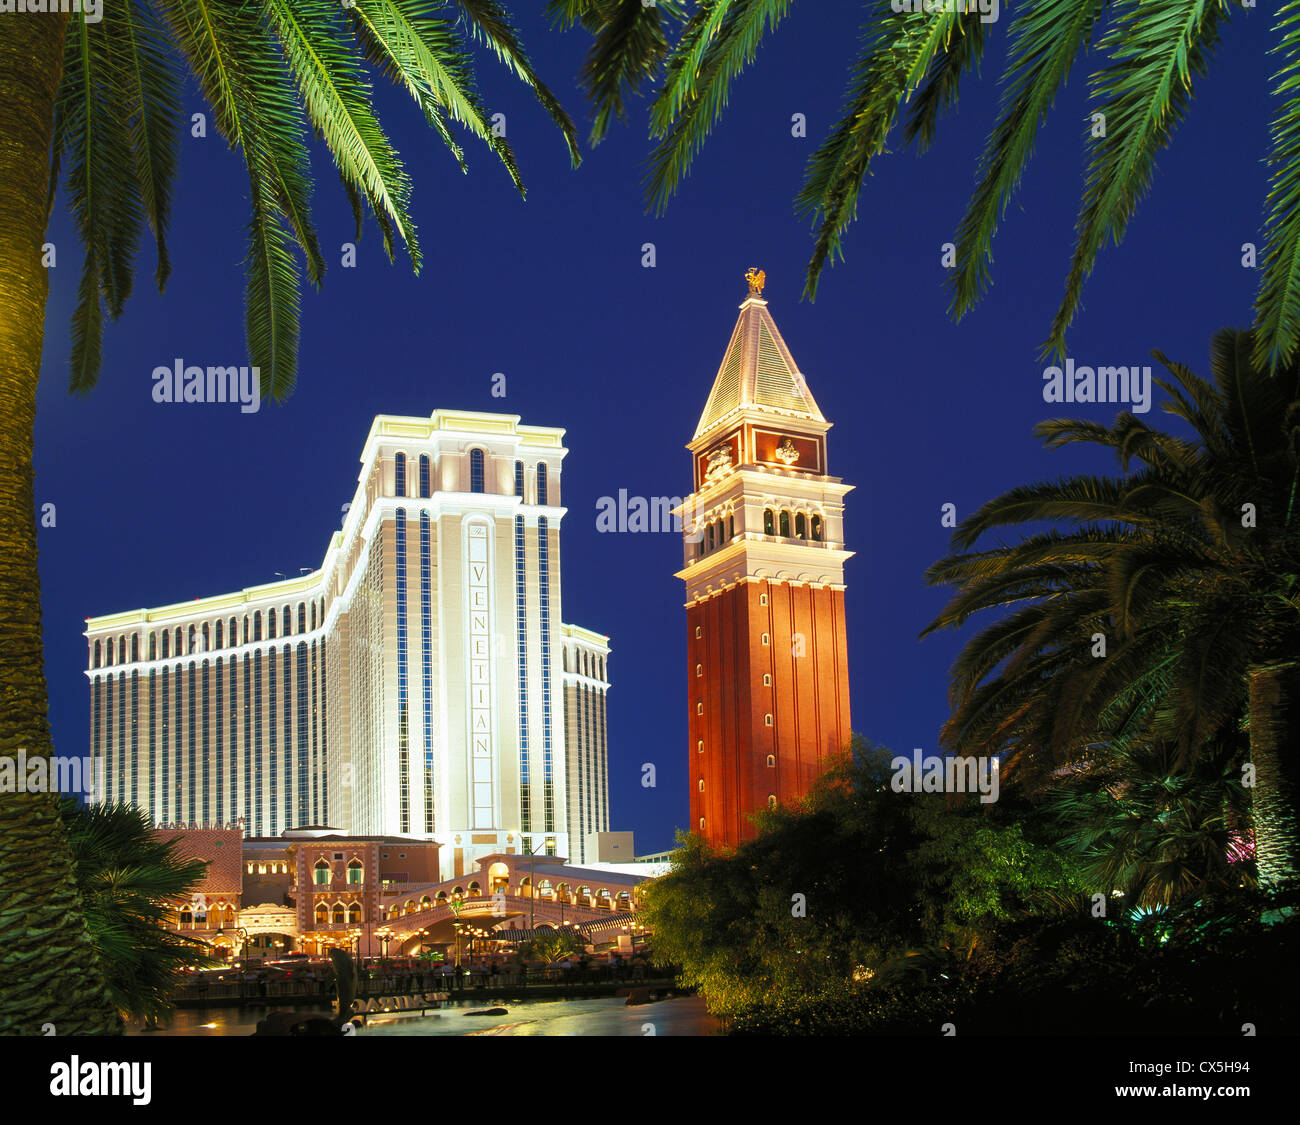 Le Venetian Hotel and Casino, Las Vegas, Nevada, USA Banque D'Images